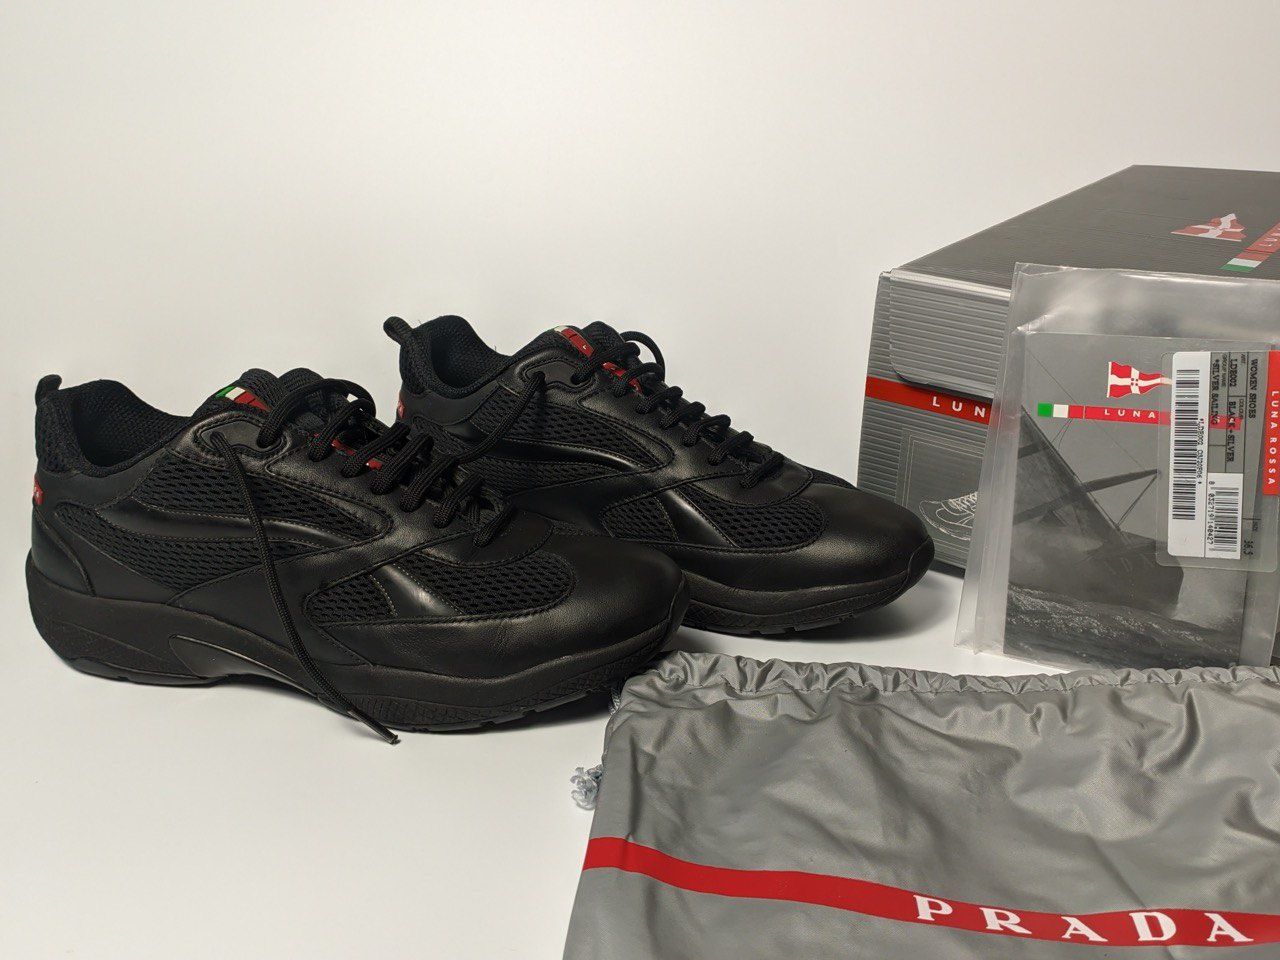 Кросівки Prada Archive Luna Rossa all black Avangard Sneakers